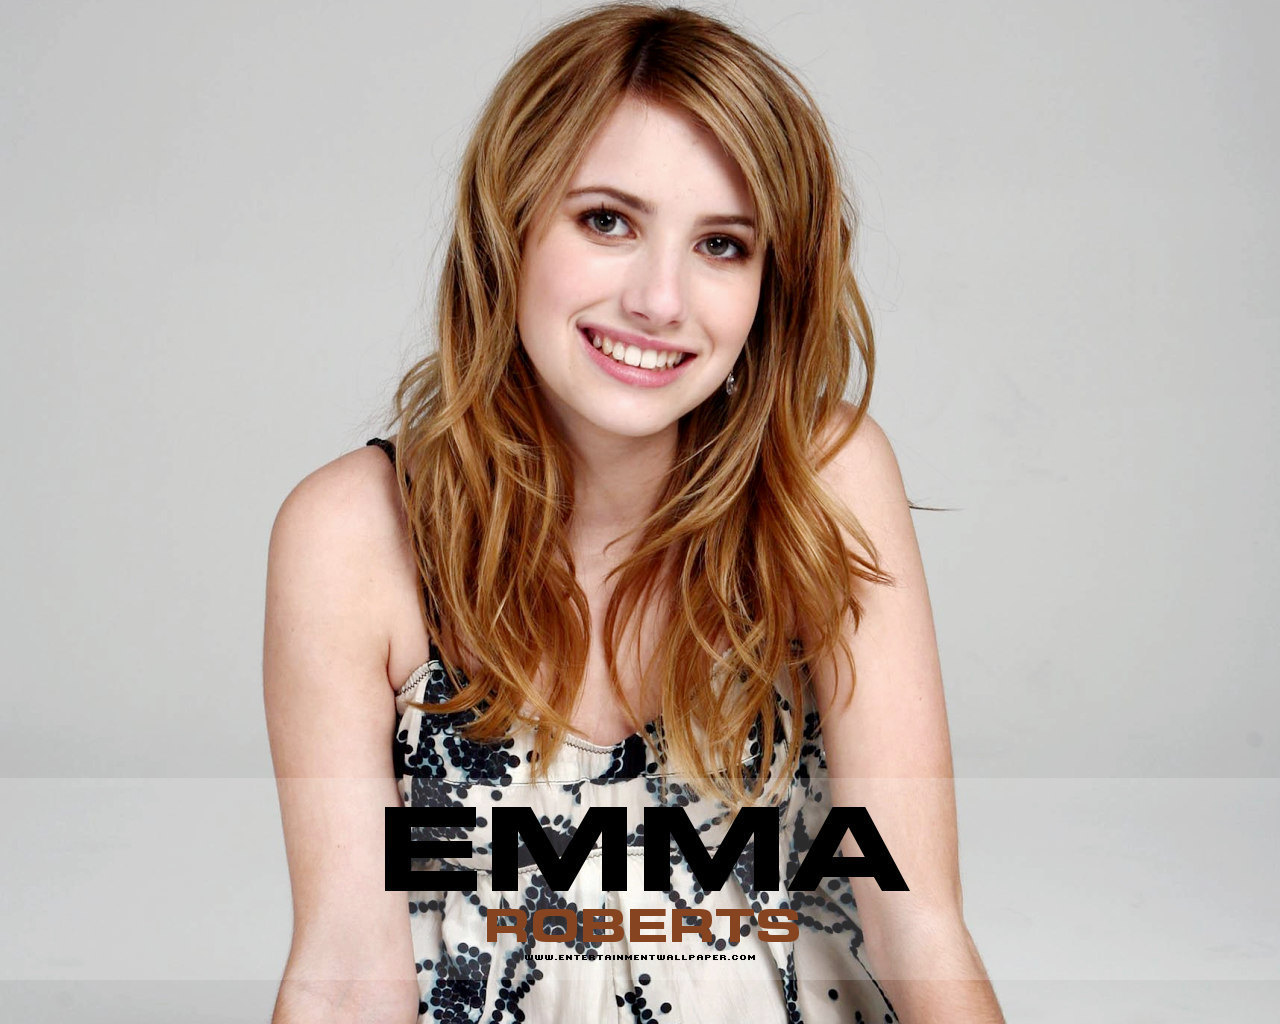 -Emma-emma-roberts-6481061-1280-1024.jpg